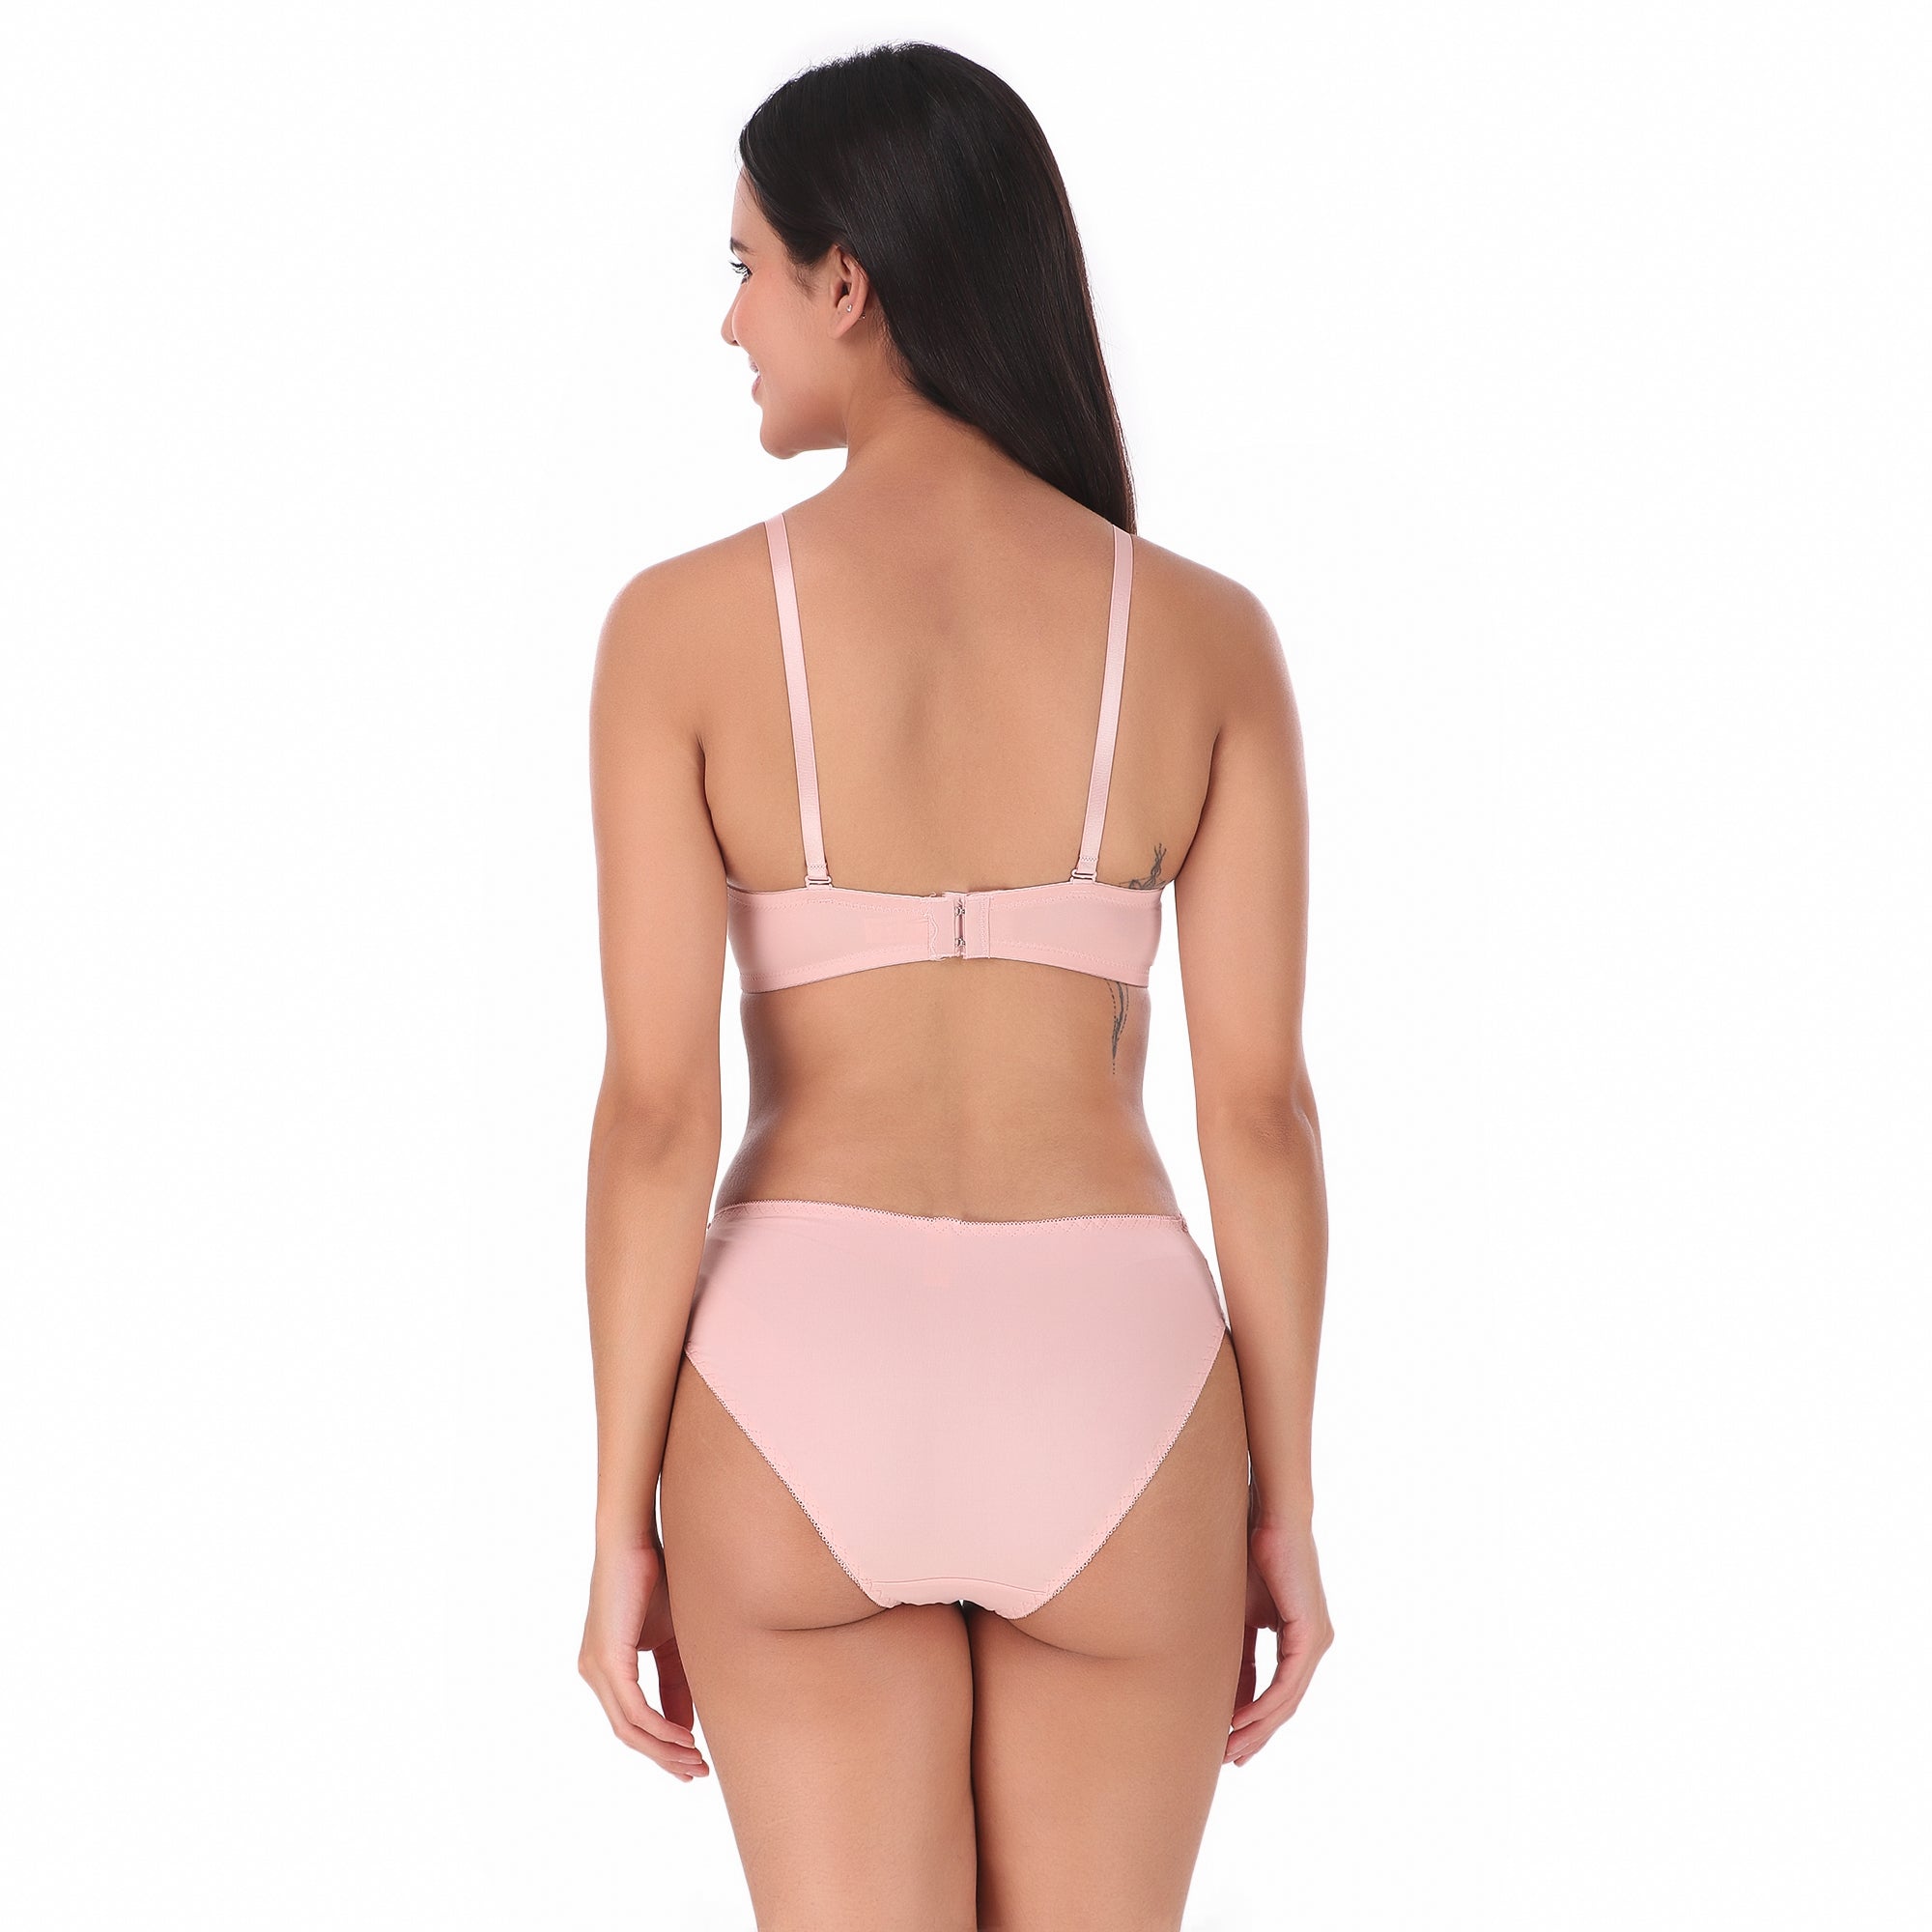 AXTZH-XBRADK2077 Designs Fashionable New Women Lace Bra & Panty set